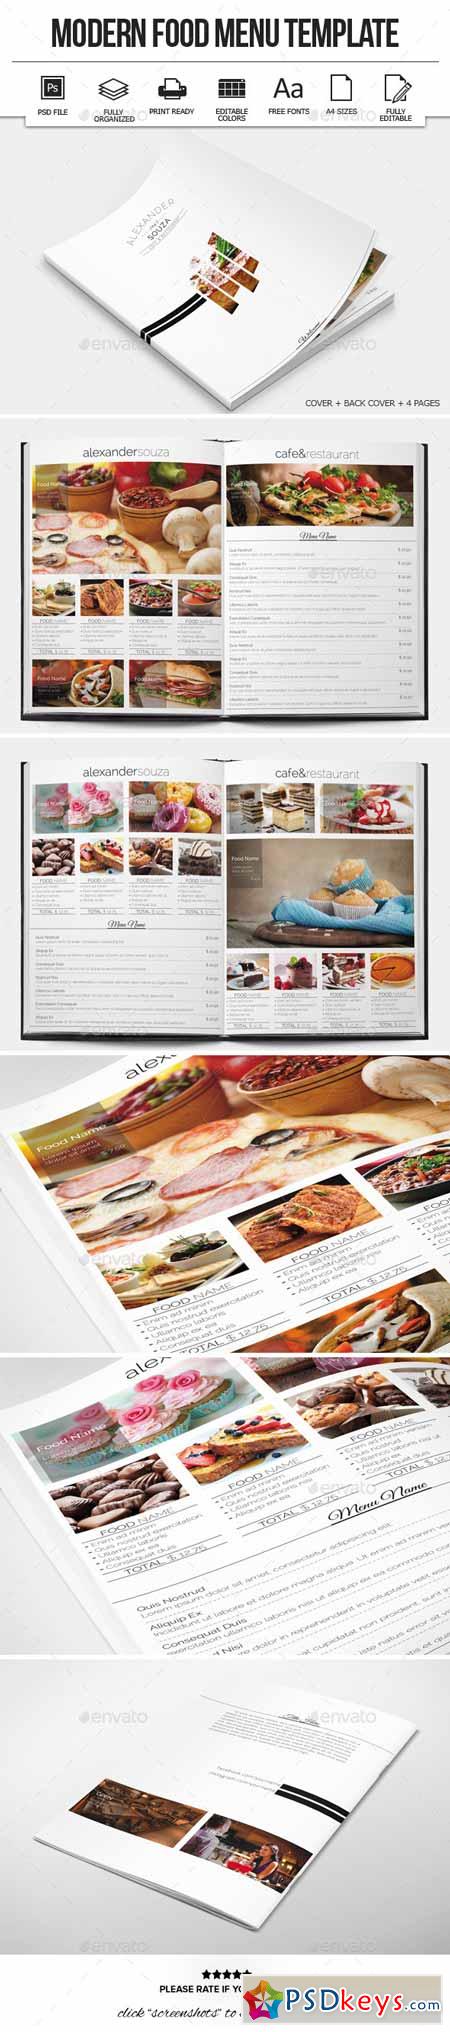 Modern Food Menu Design 10477515